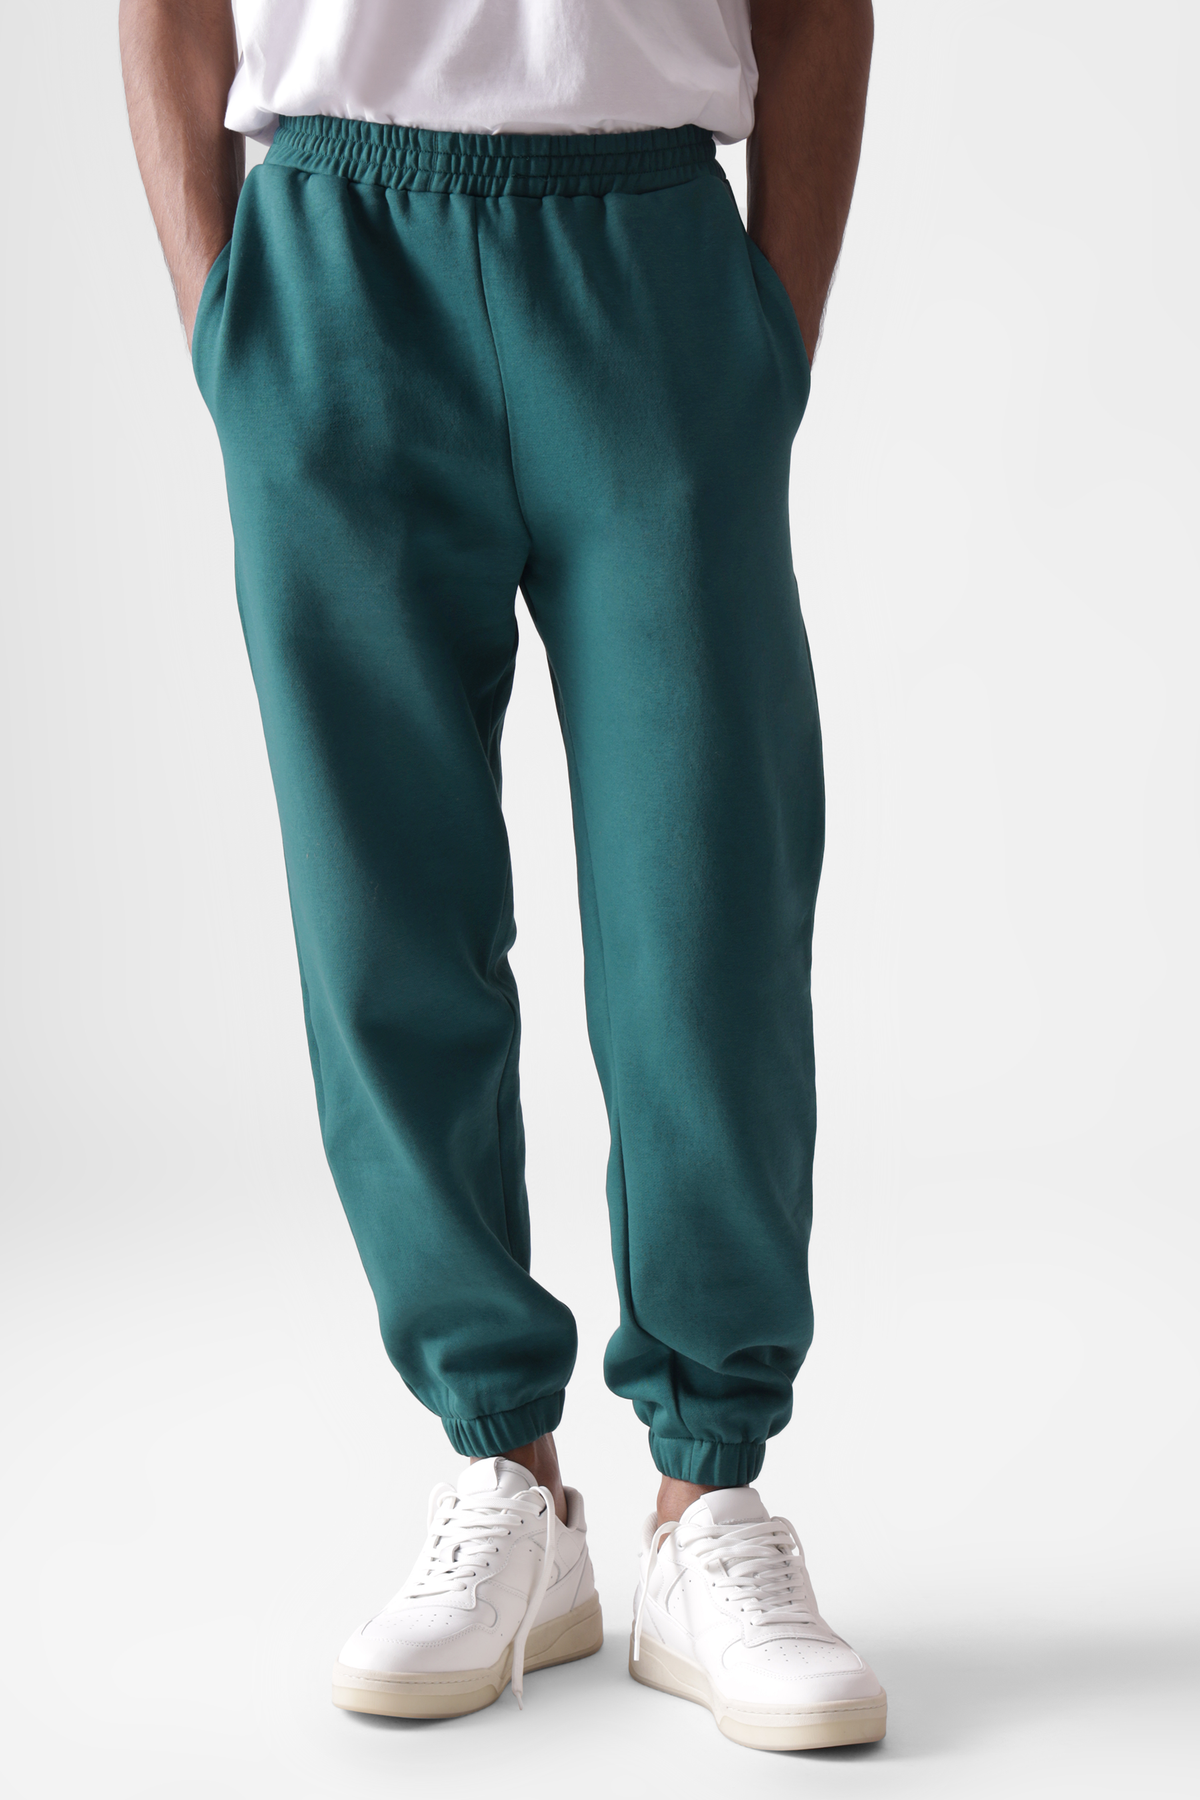 Aayomet Mens Snow Pants Men's Sweatpants, EcoSmart Sweatpants for Men,  Men's Lounge Pants with Cinched Cuffs,Green M 